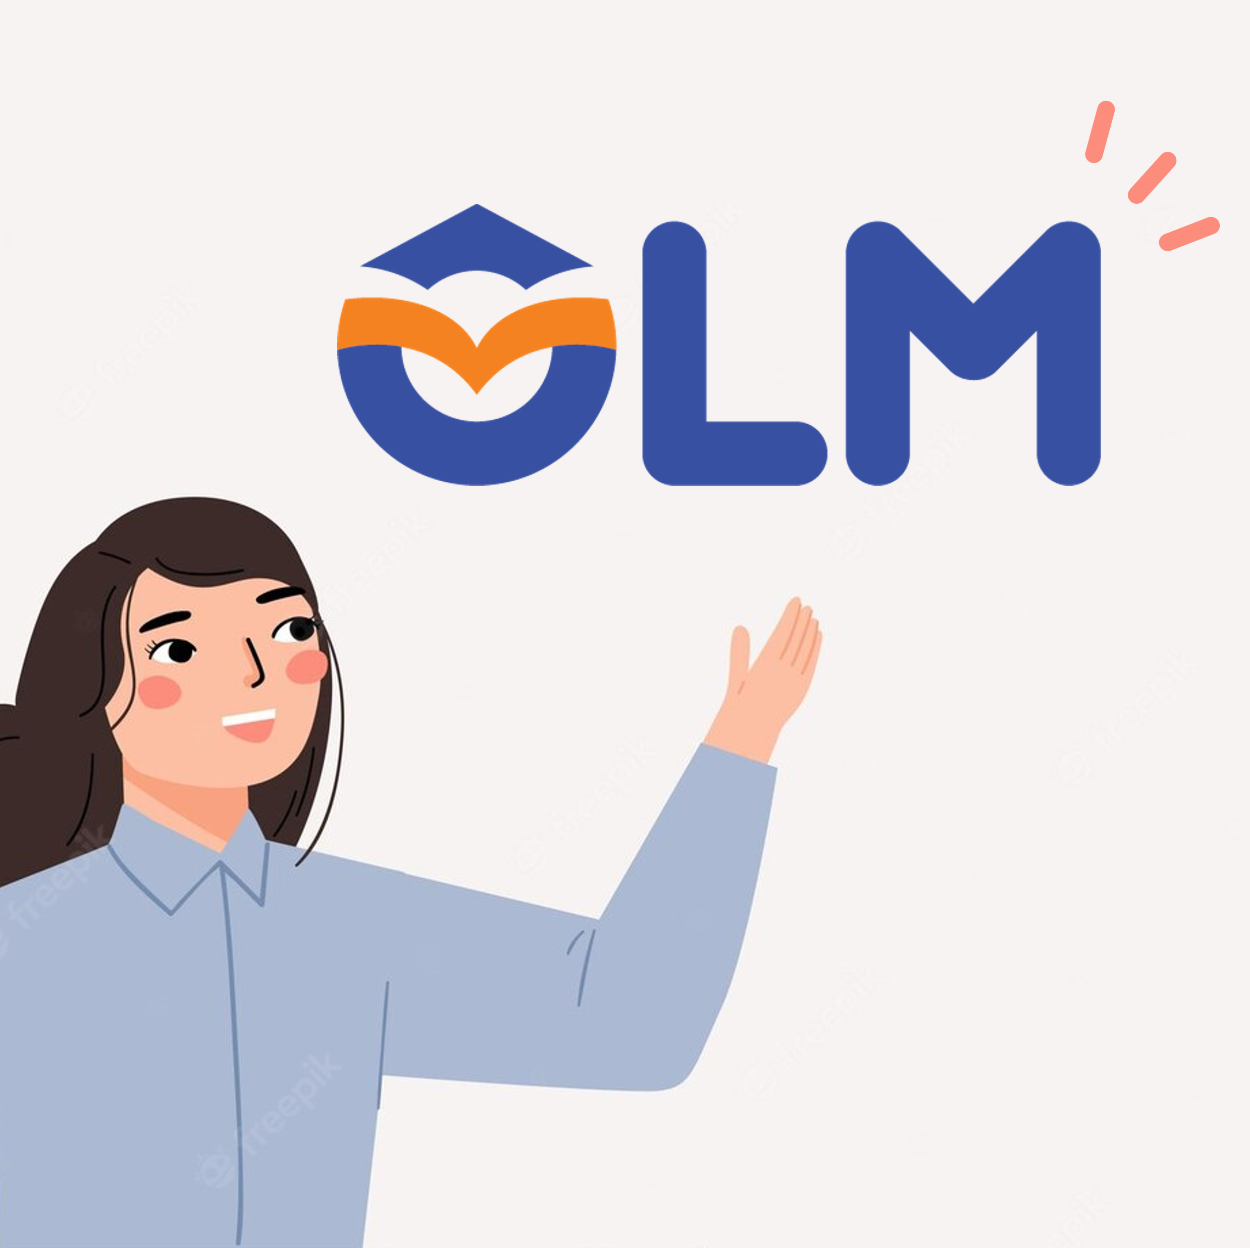 OLM ra mắt logo mới